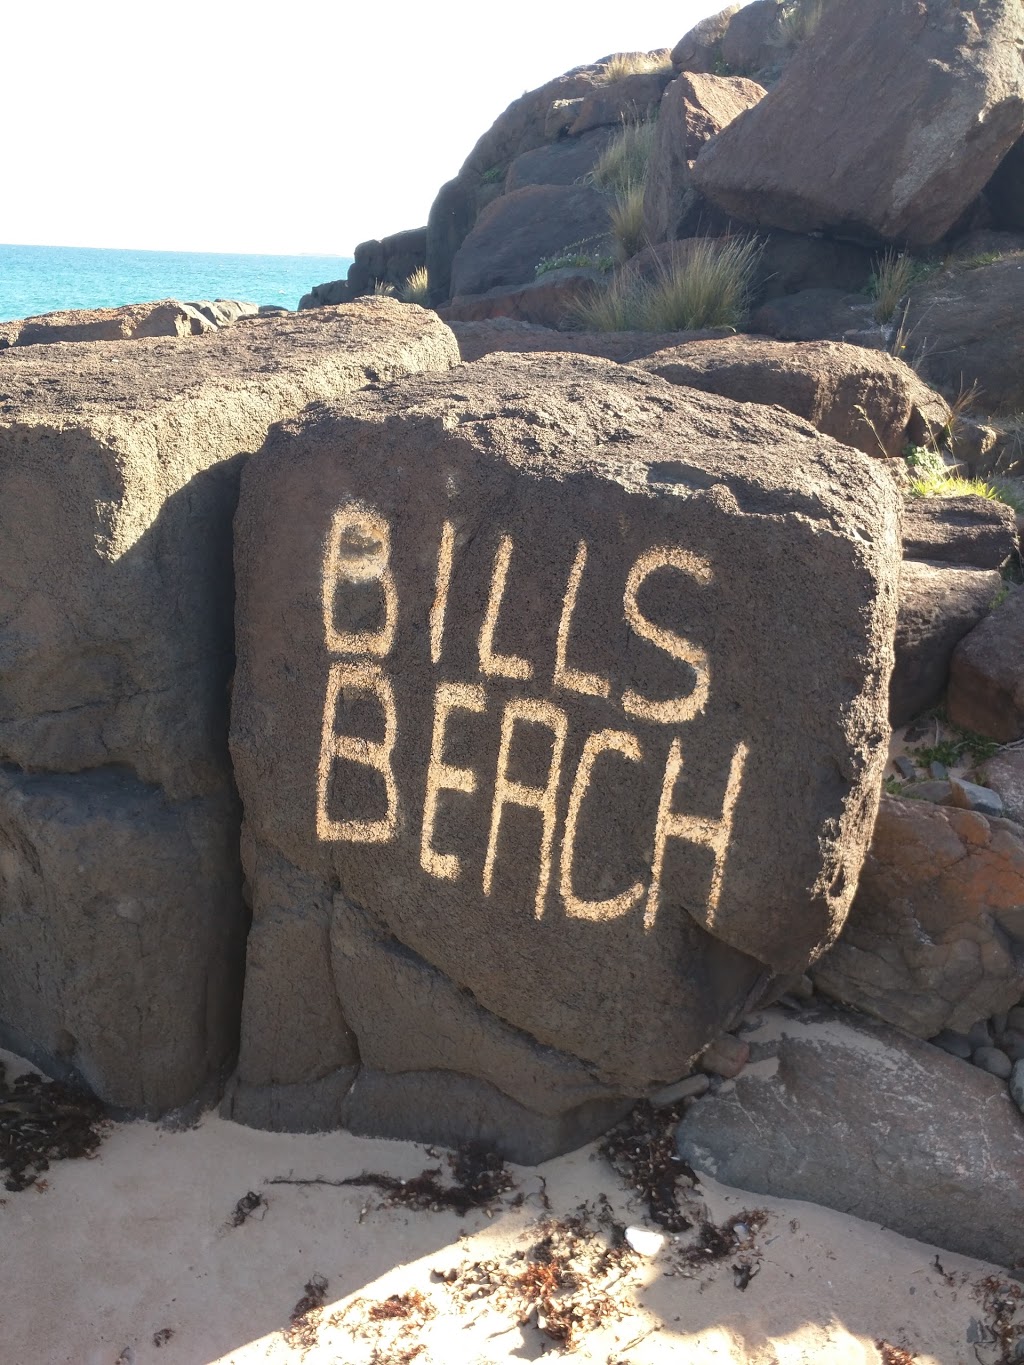 Bills Beach | park | Swansea TAS, Australia